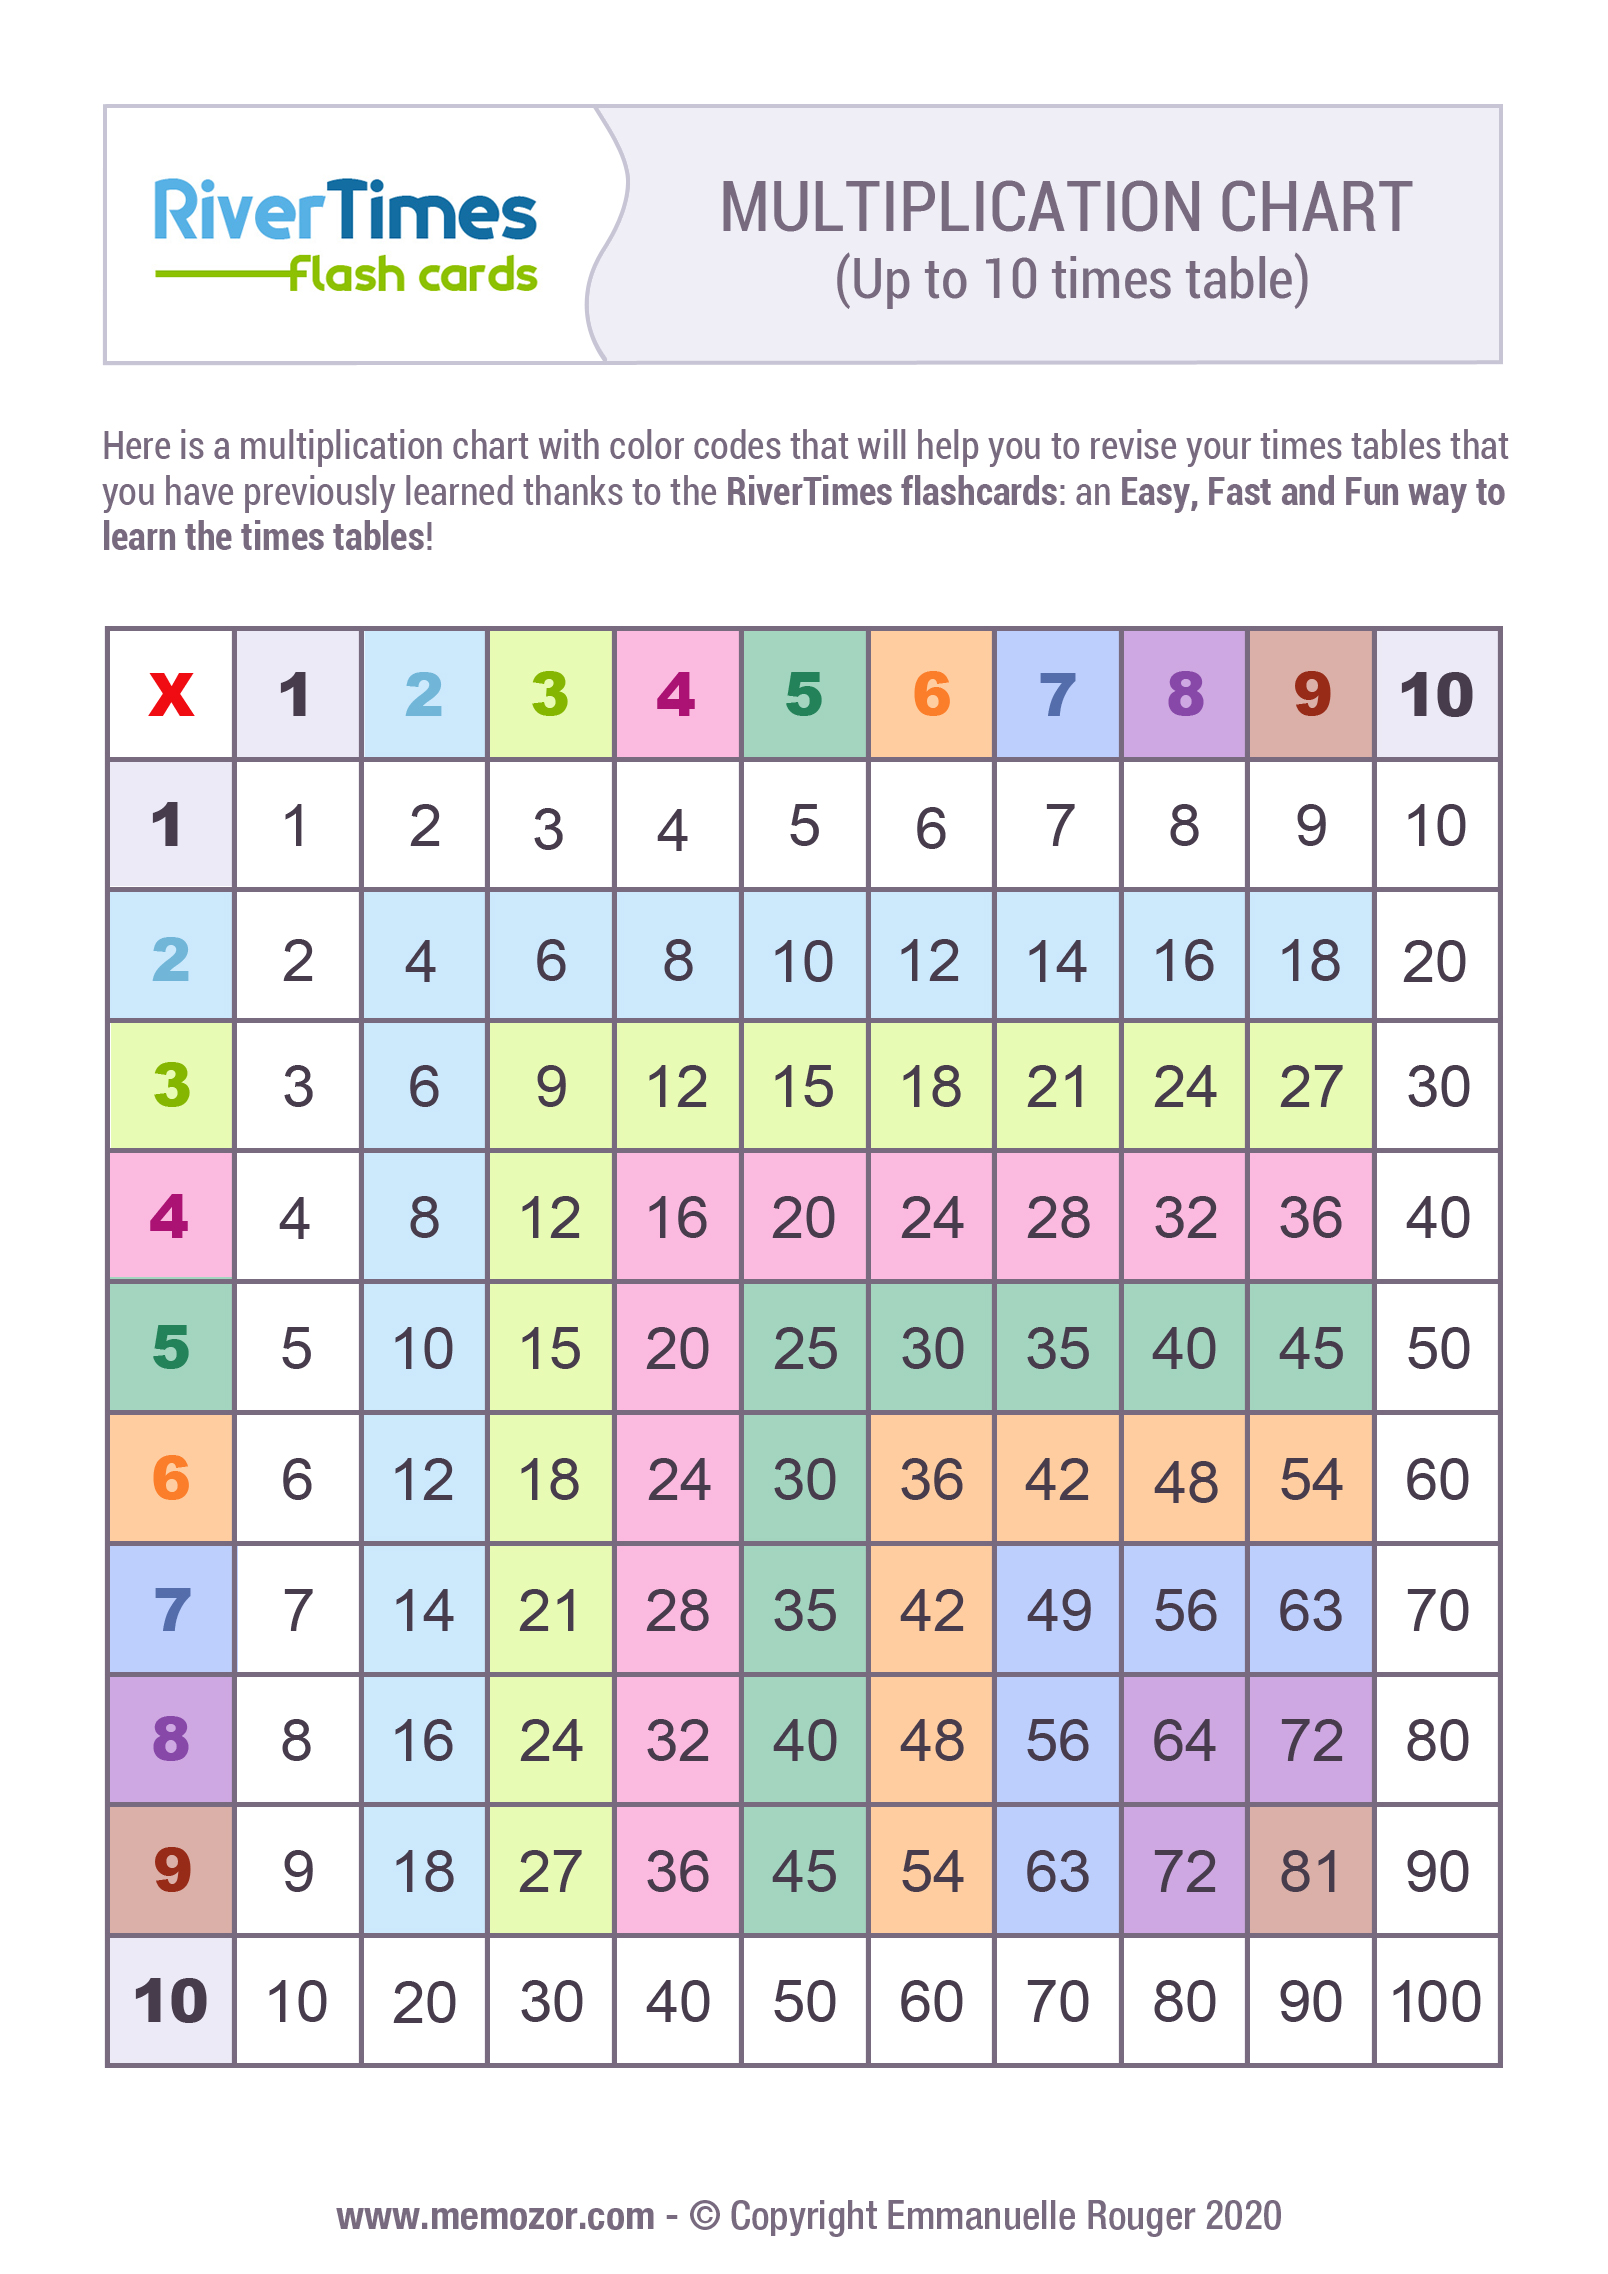 Printable & colorful Multiplication Chart 110 RiverTimes